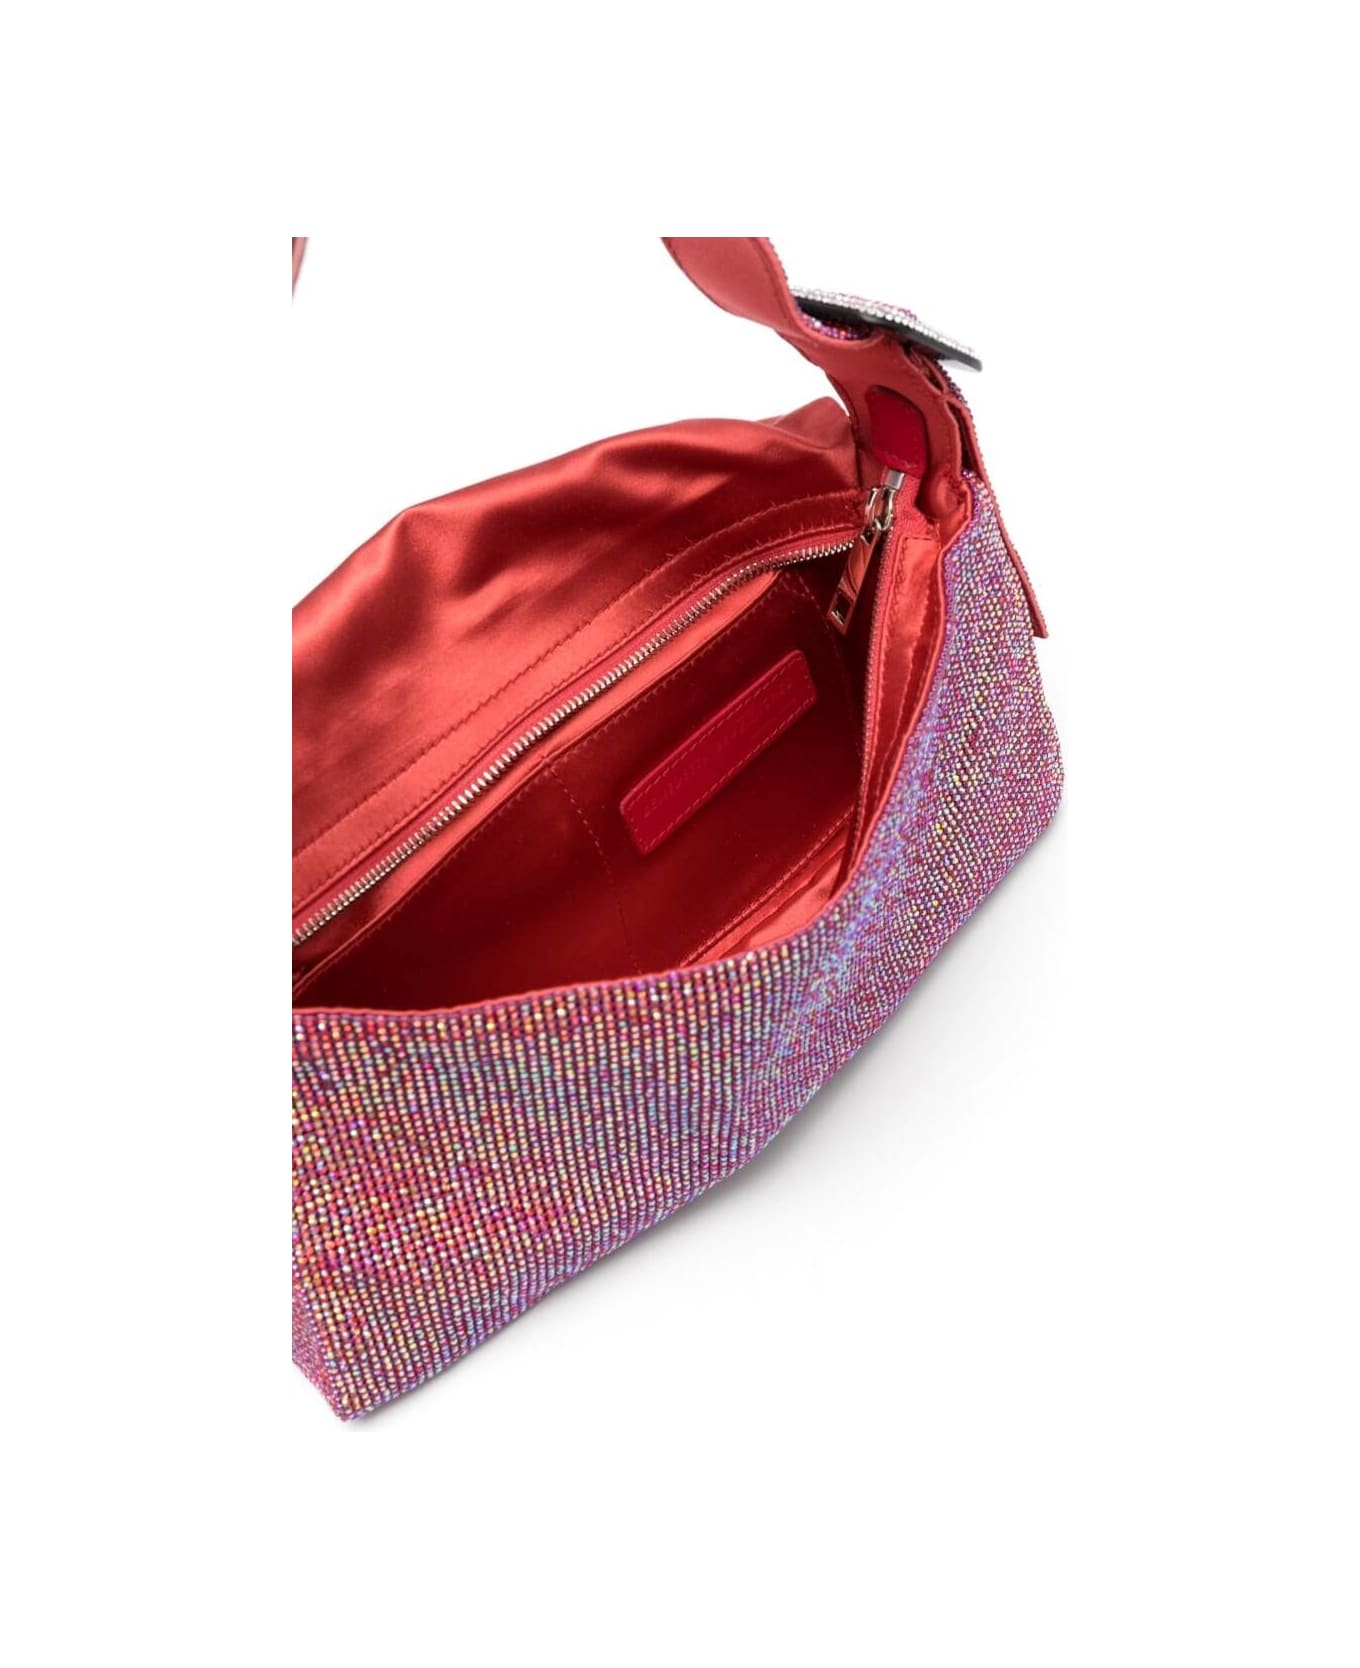 Benedetta Bruzziches Vitty La Grande Shoulder Bag With All-over Crystal Embellishment In Rhinestone Mesh Woman - Fuxia トートバッグ